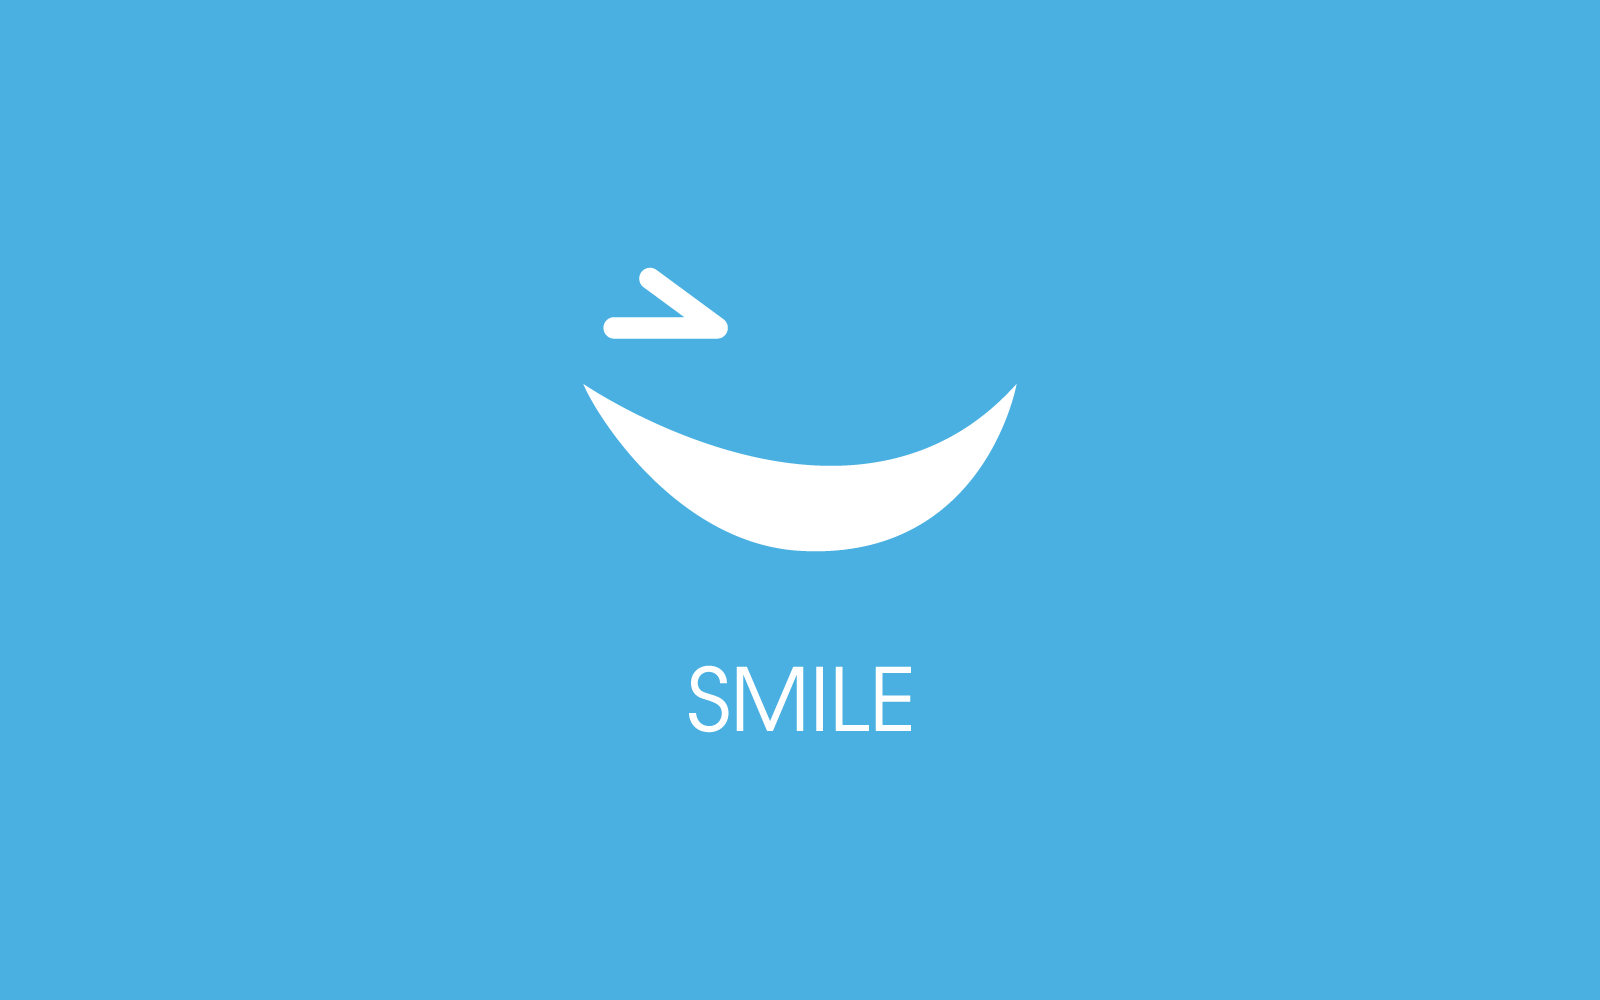 Smile happy face emoticon illustration vector flat design